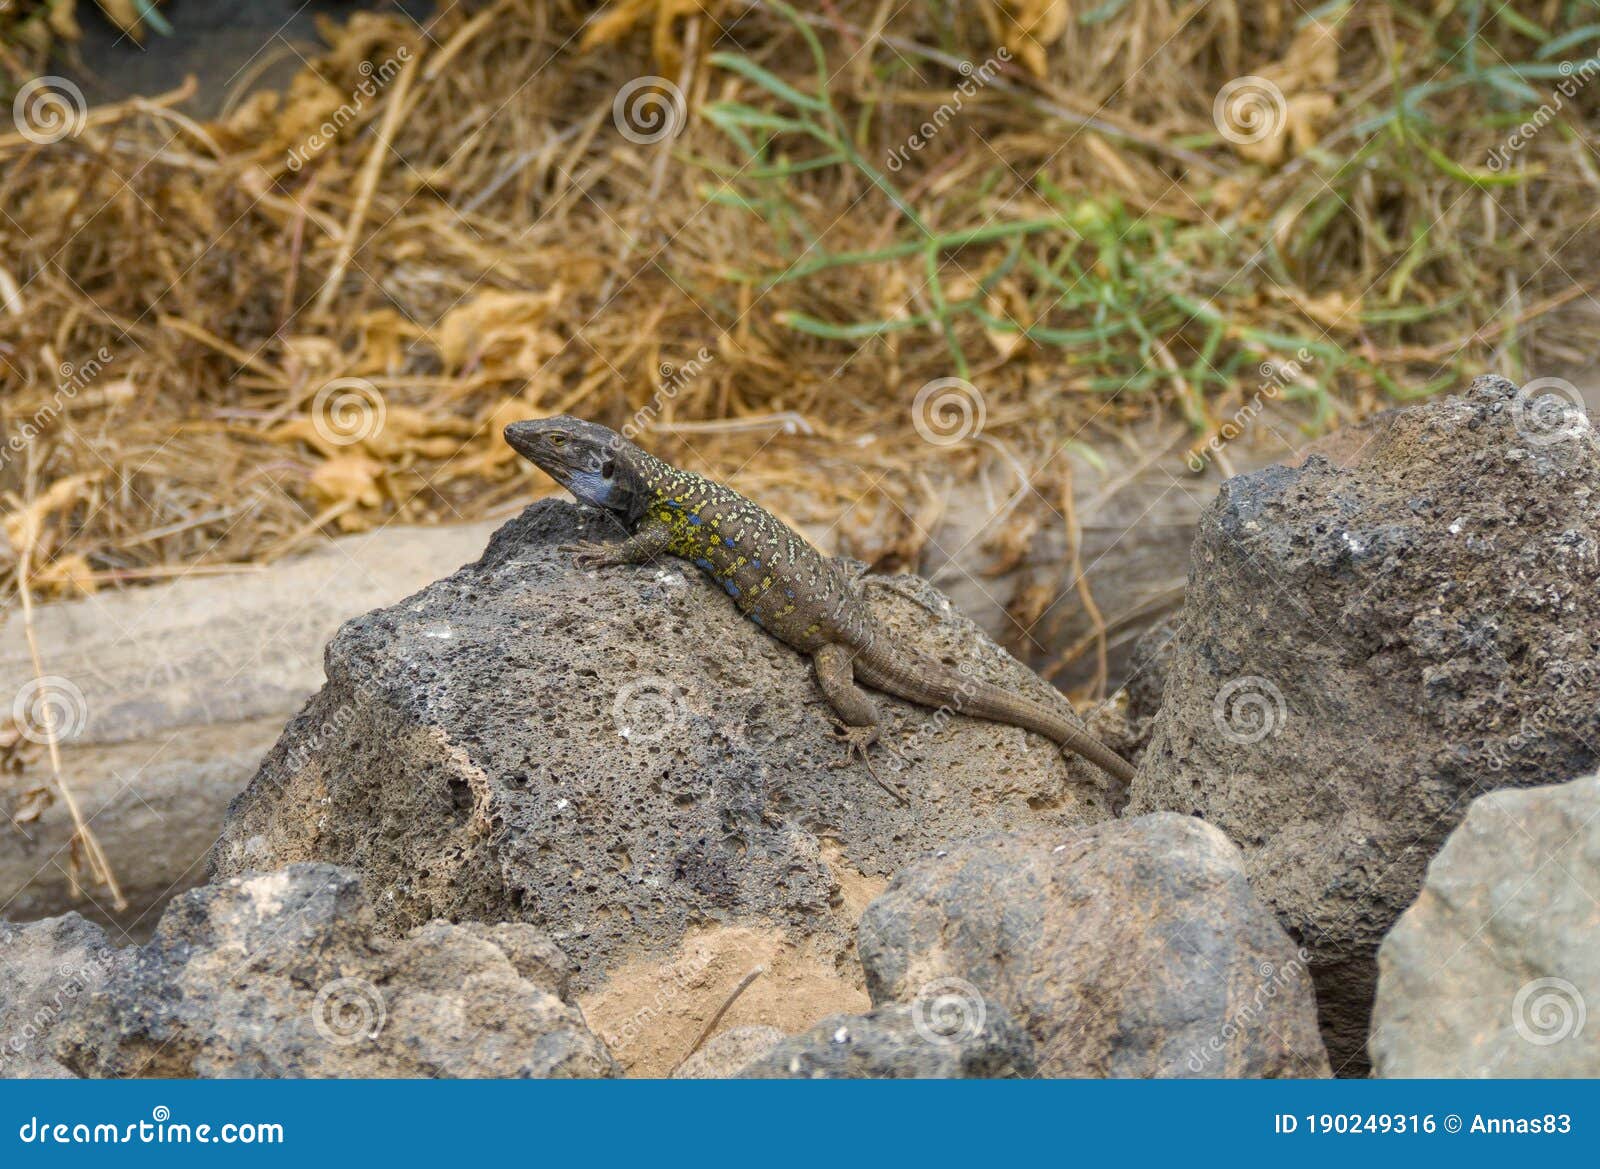 tenerife lizard or western canarien lizard, tizon, gallotia galloti on volcanic stones in the north of tenerife, canary islands, s